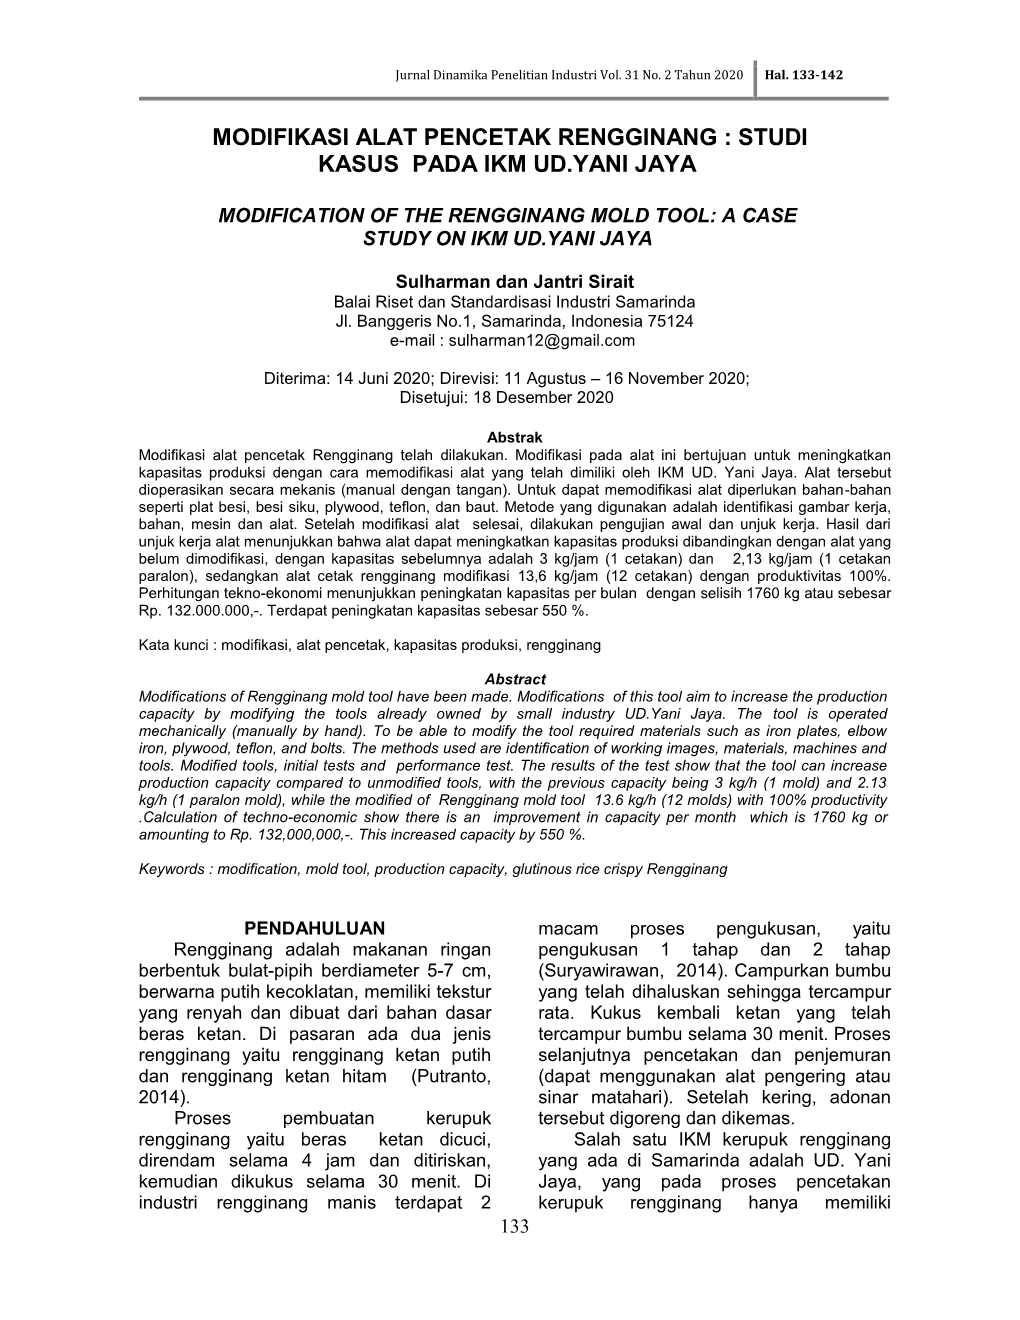 Modifikasi Alat Pencetak Rengginang : Studi Kasus Pada Ikm Ud.Yani Jaya